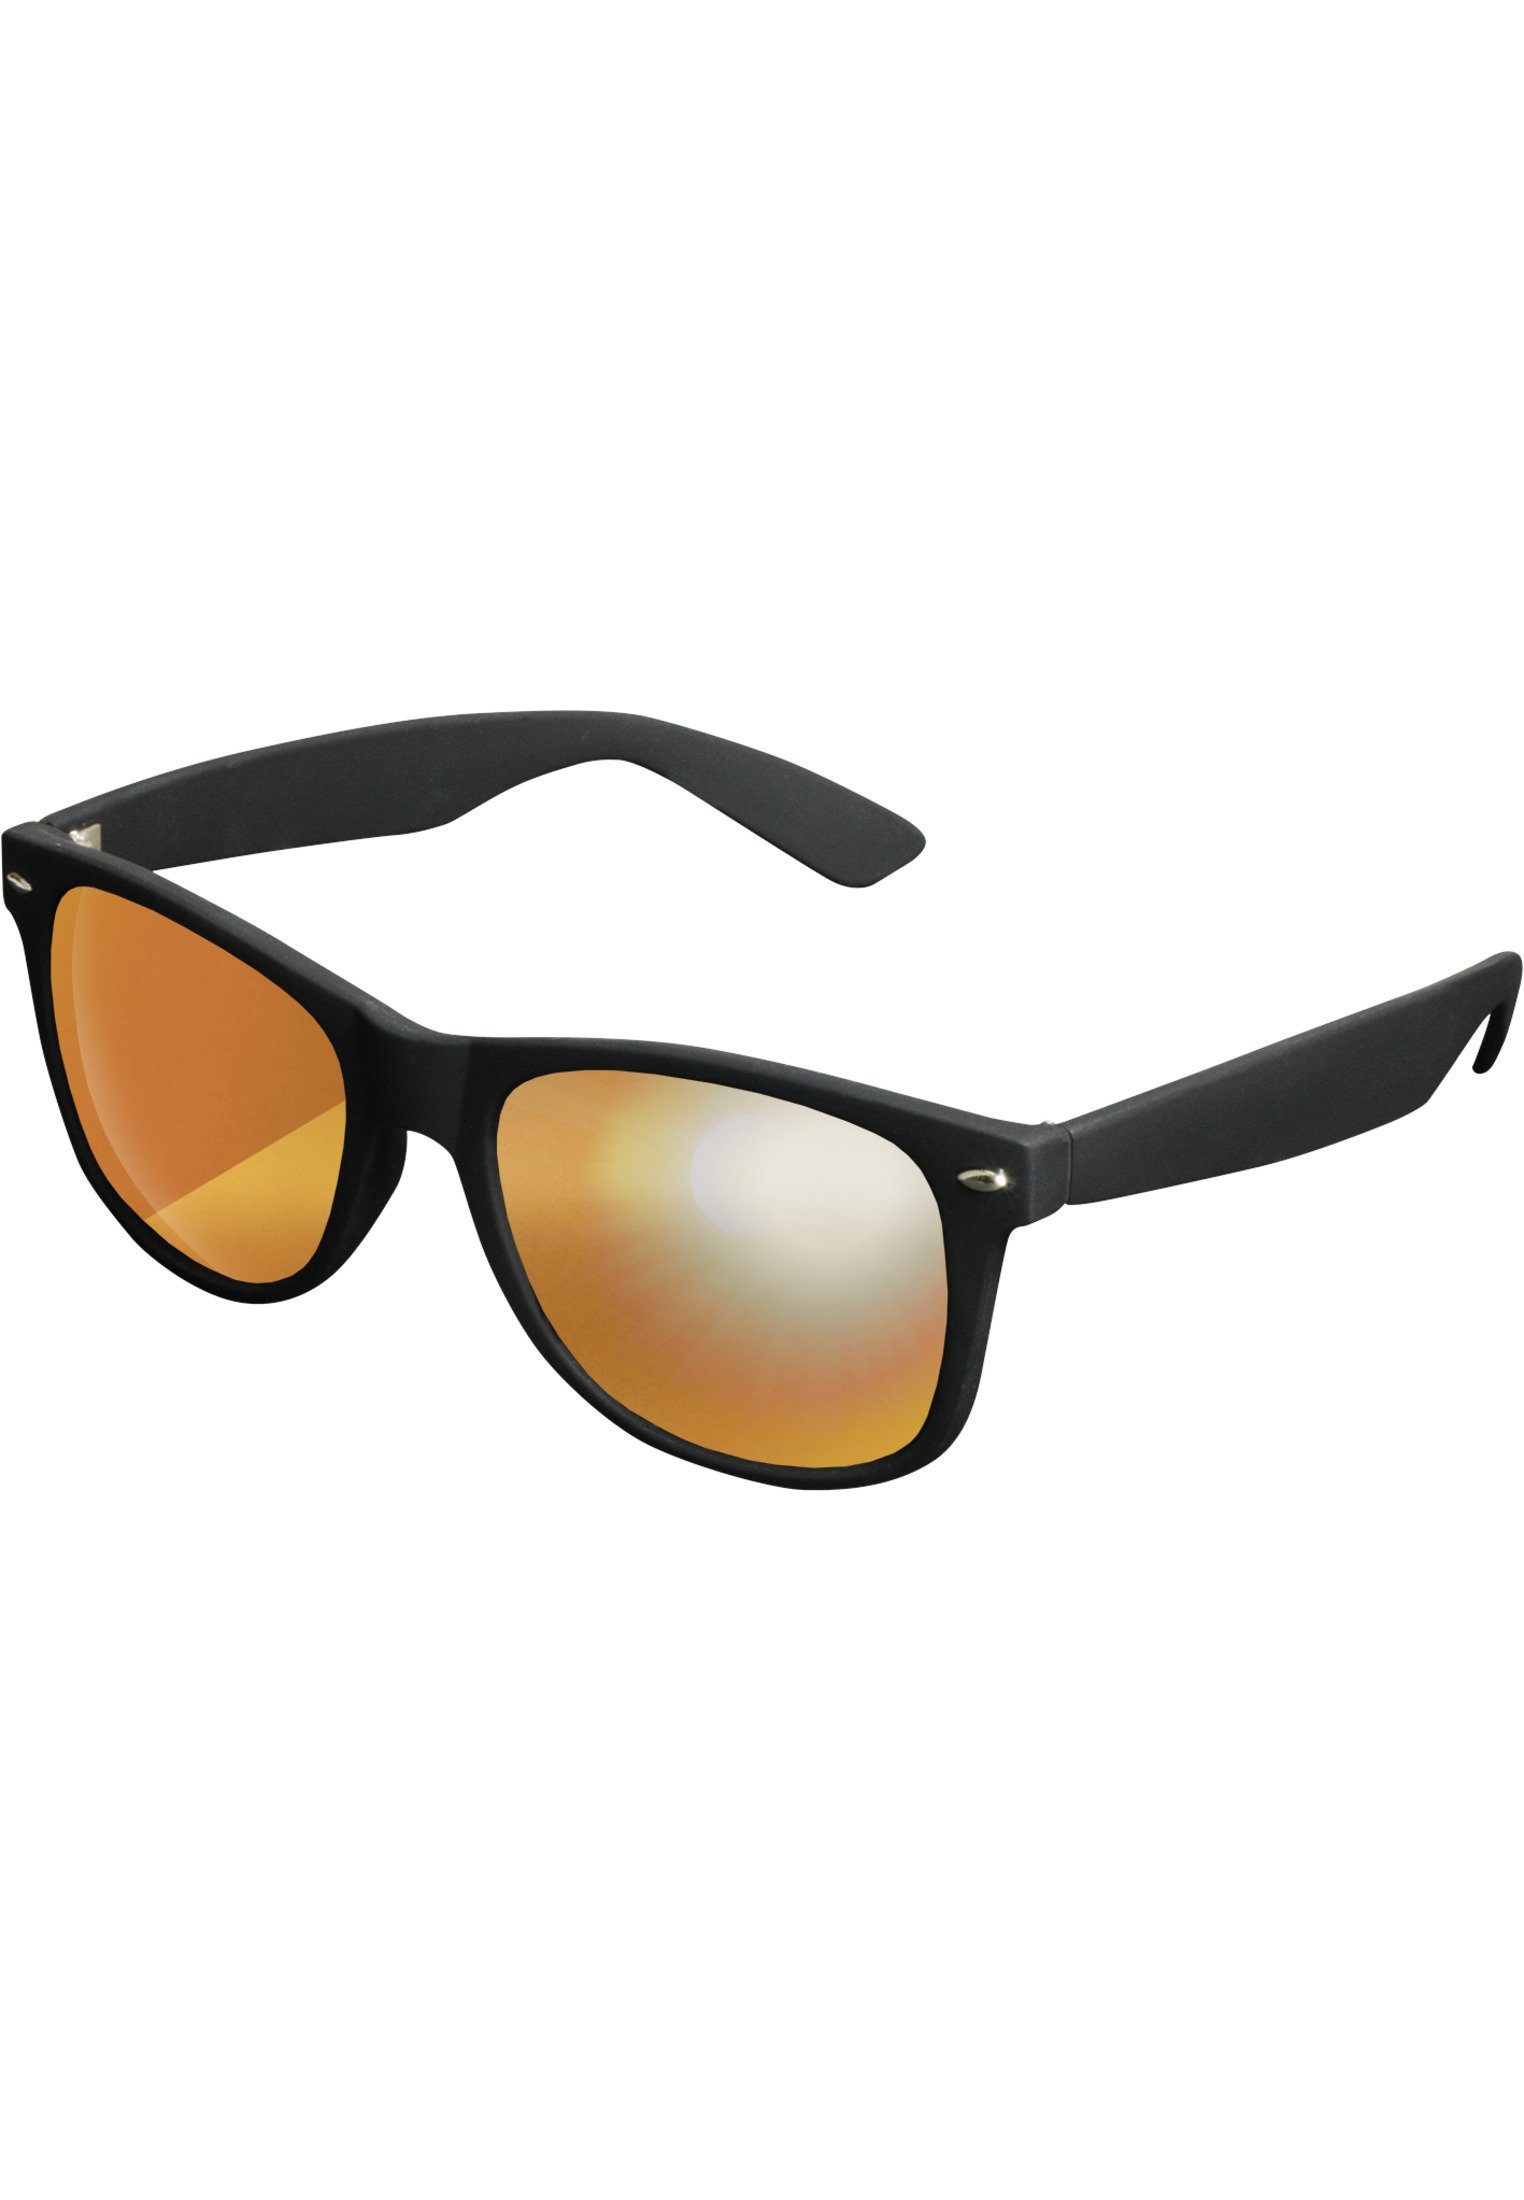 Sunglasses blk/orange Likoma MSTRDS Accessoires Mirror Sonnenbrille